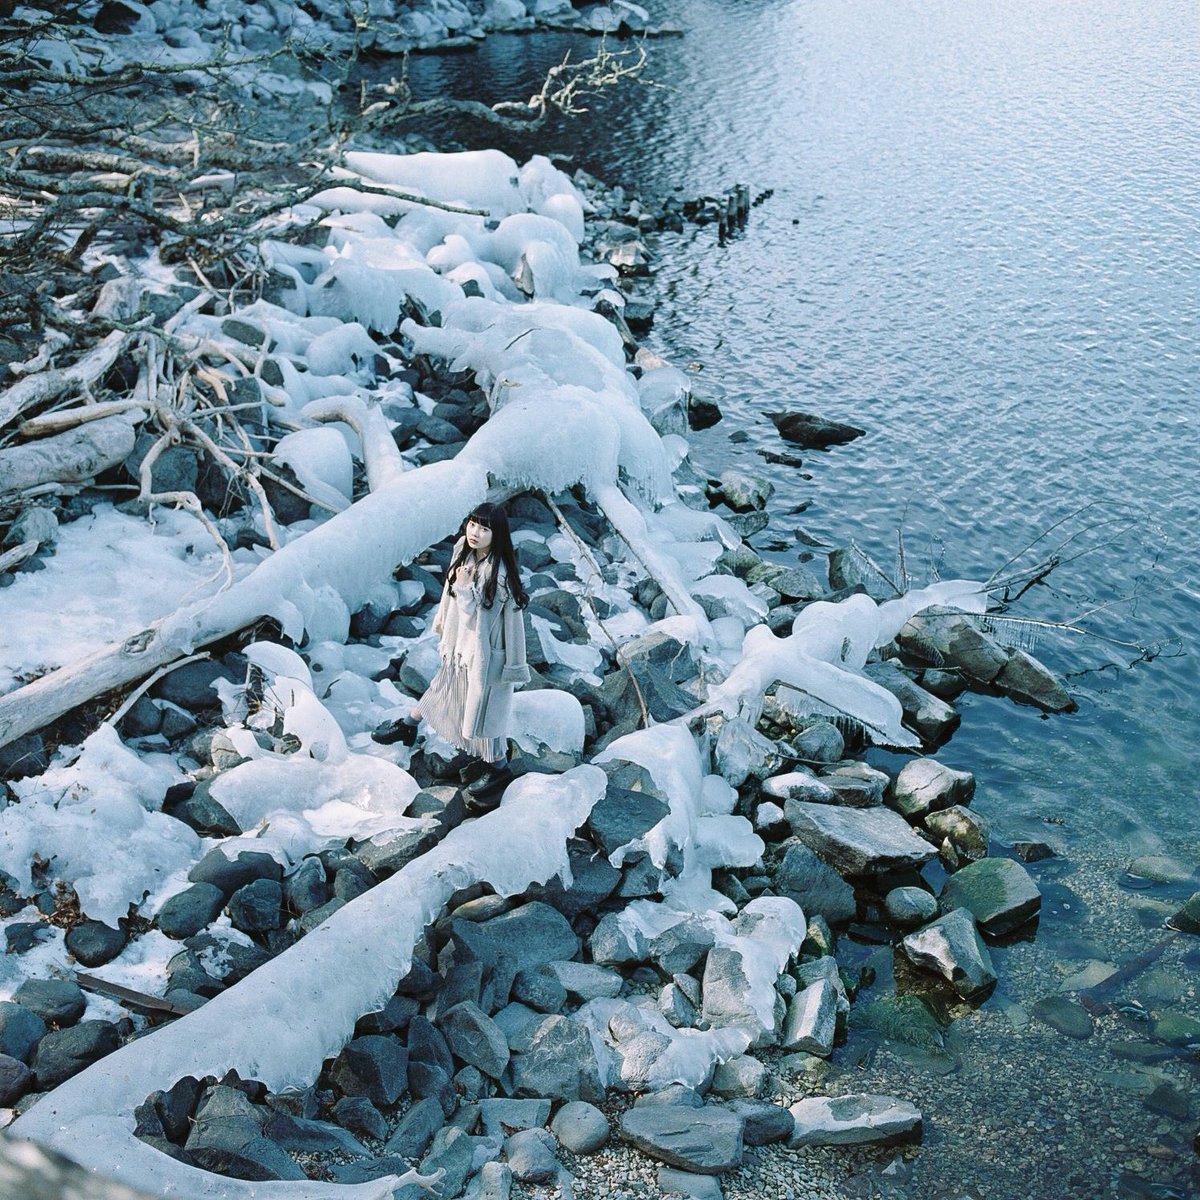 Icey Chuzenji lake

#Hasselblad500CM